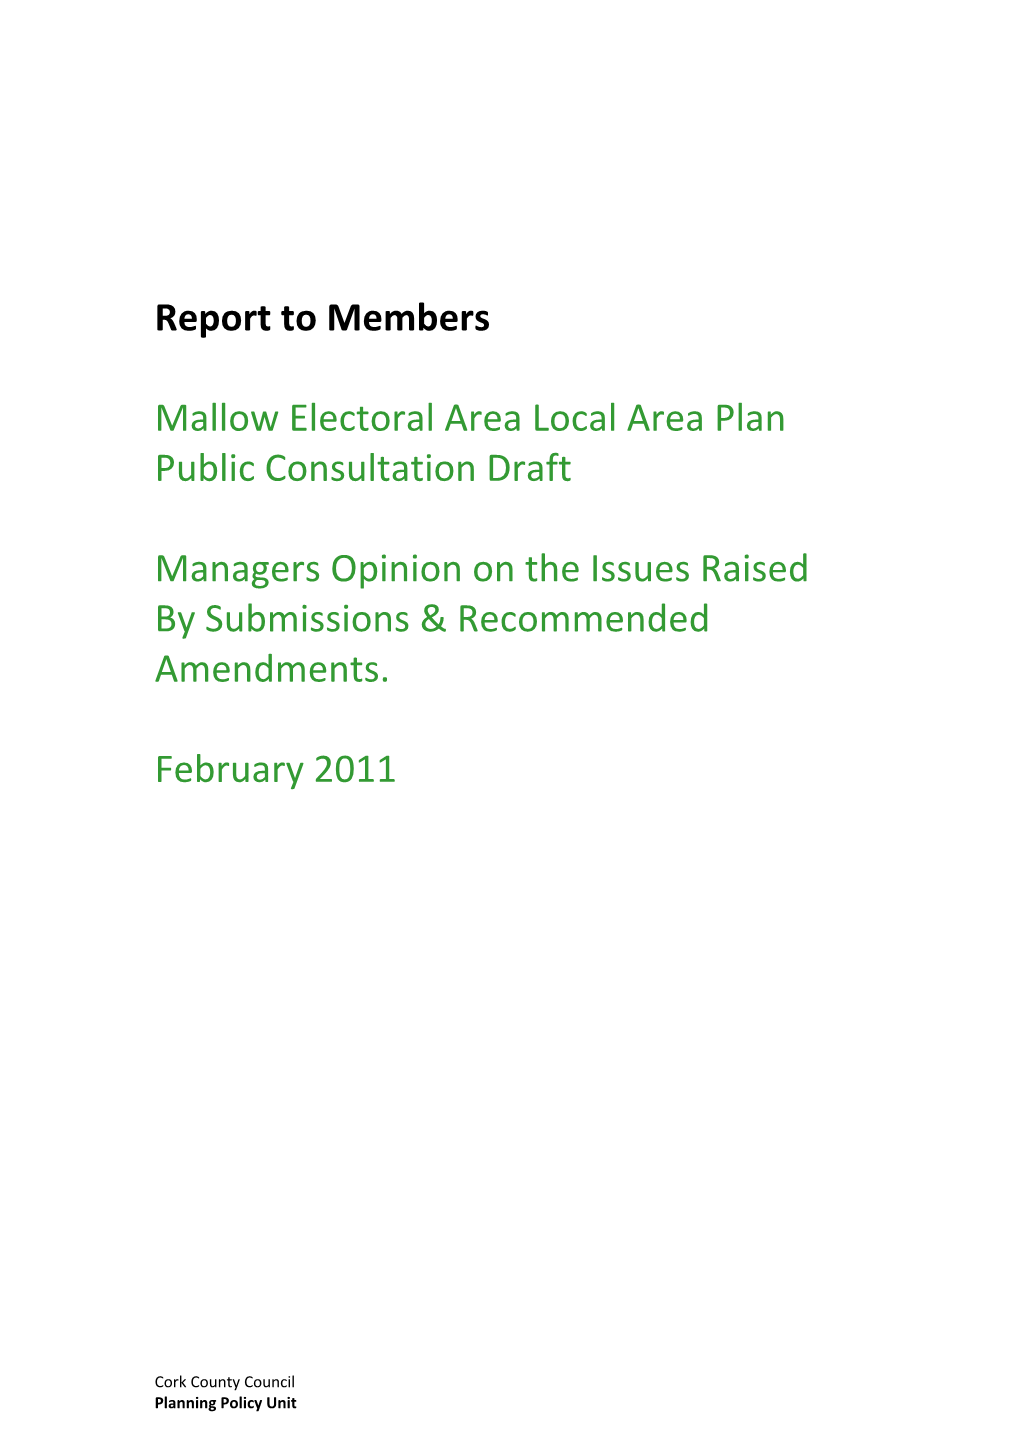 Mallow Electoral Area Local Area Plan Public Consultation Draft